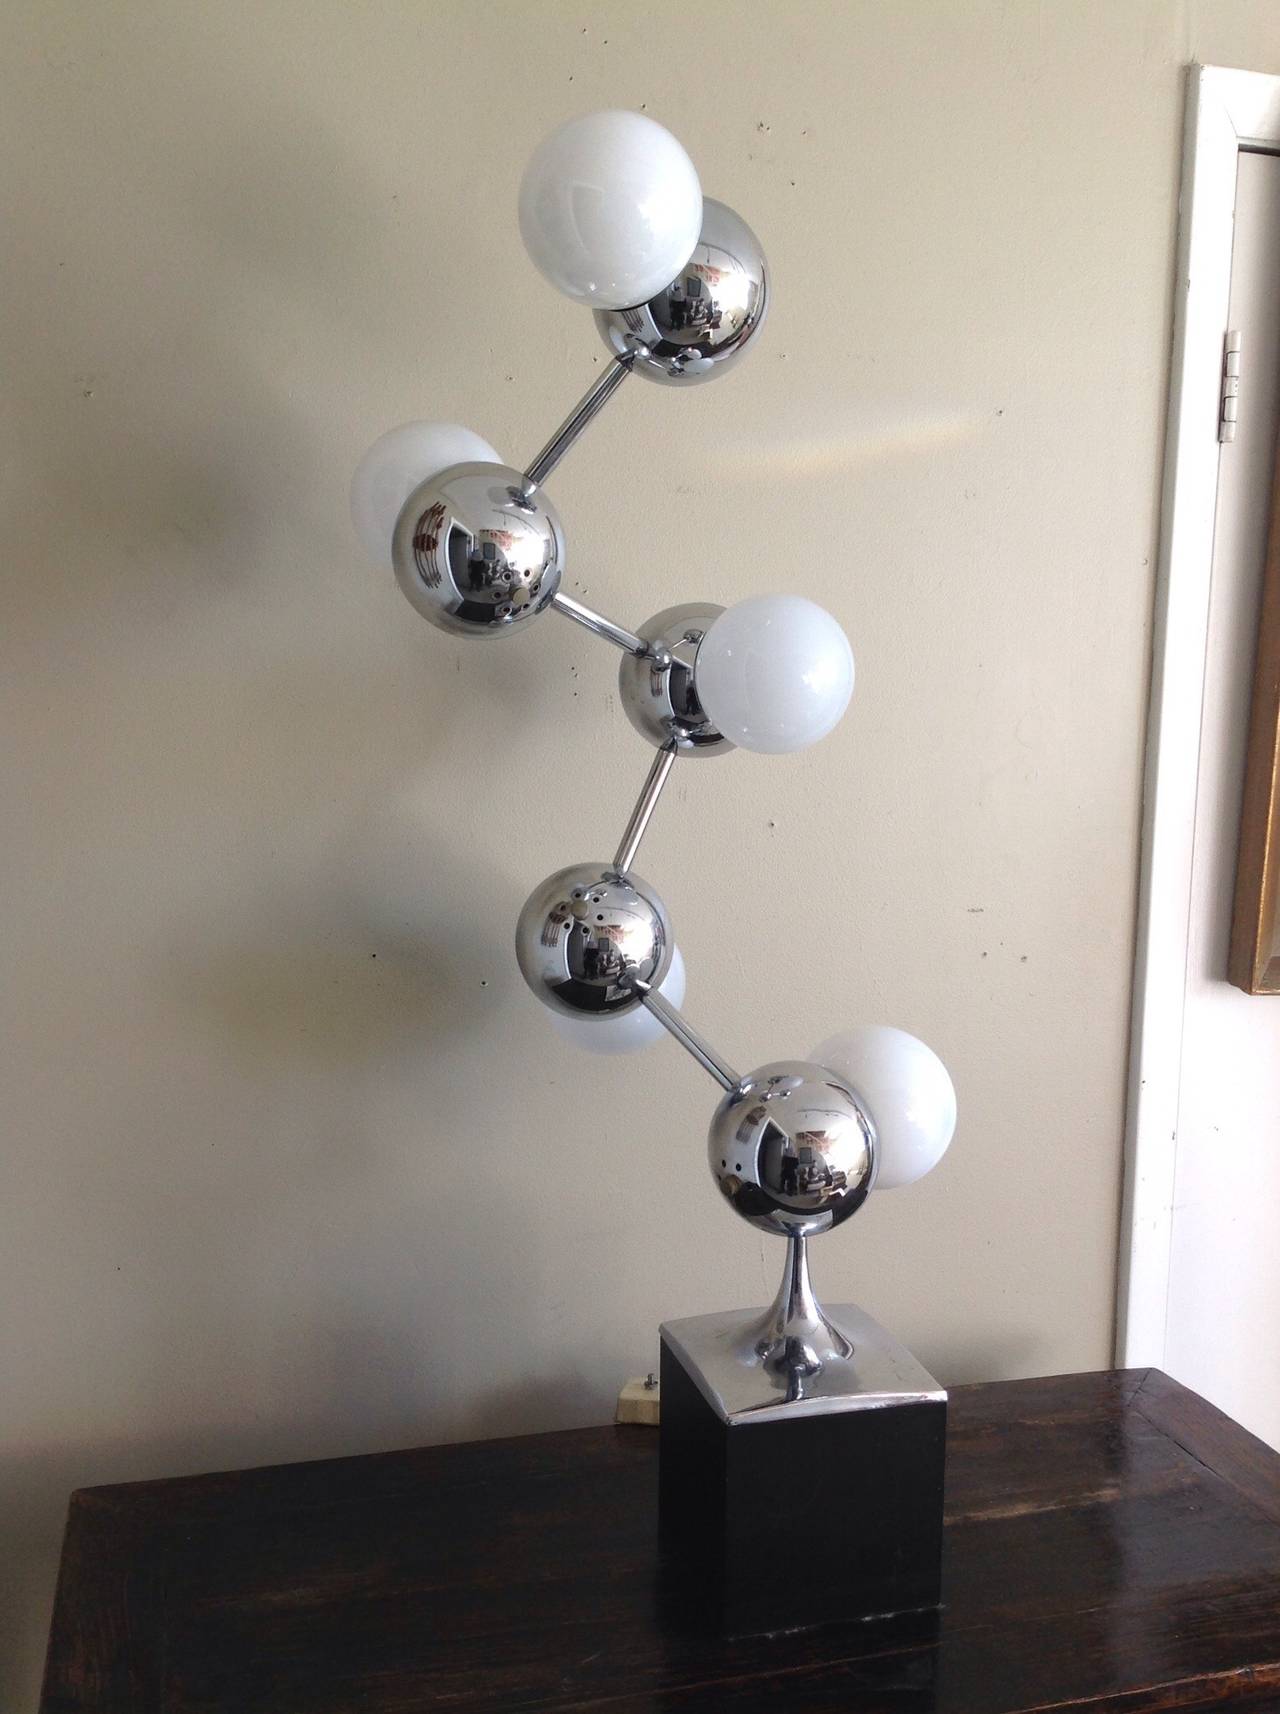 Atomic table lamp circa 1960 designed by Robert Sonneman, circa 1965.